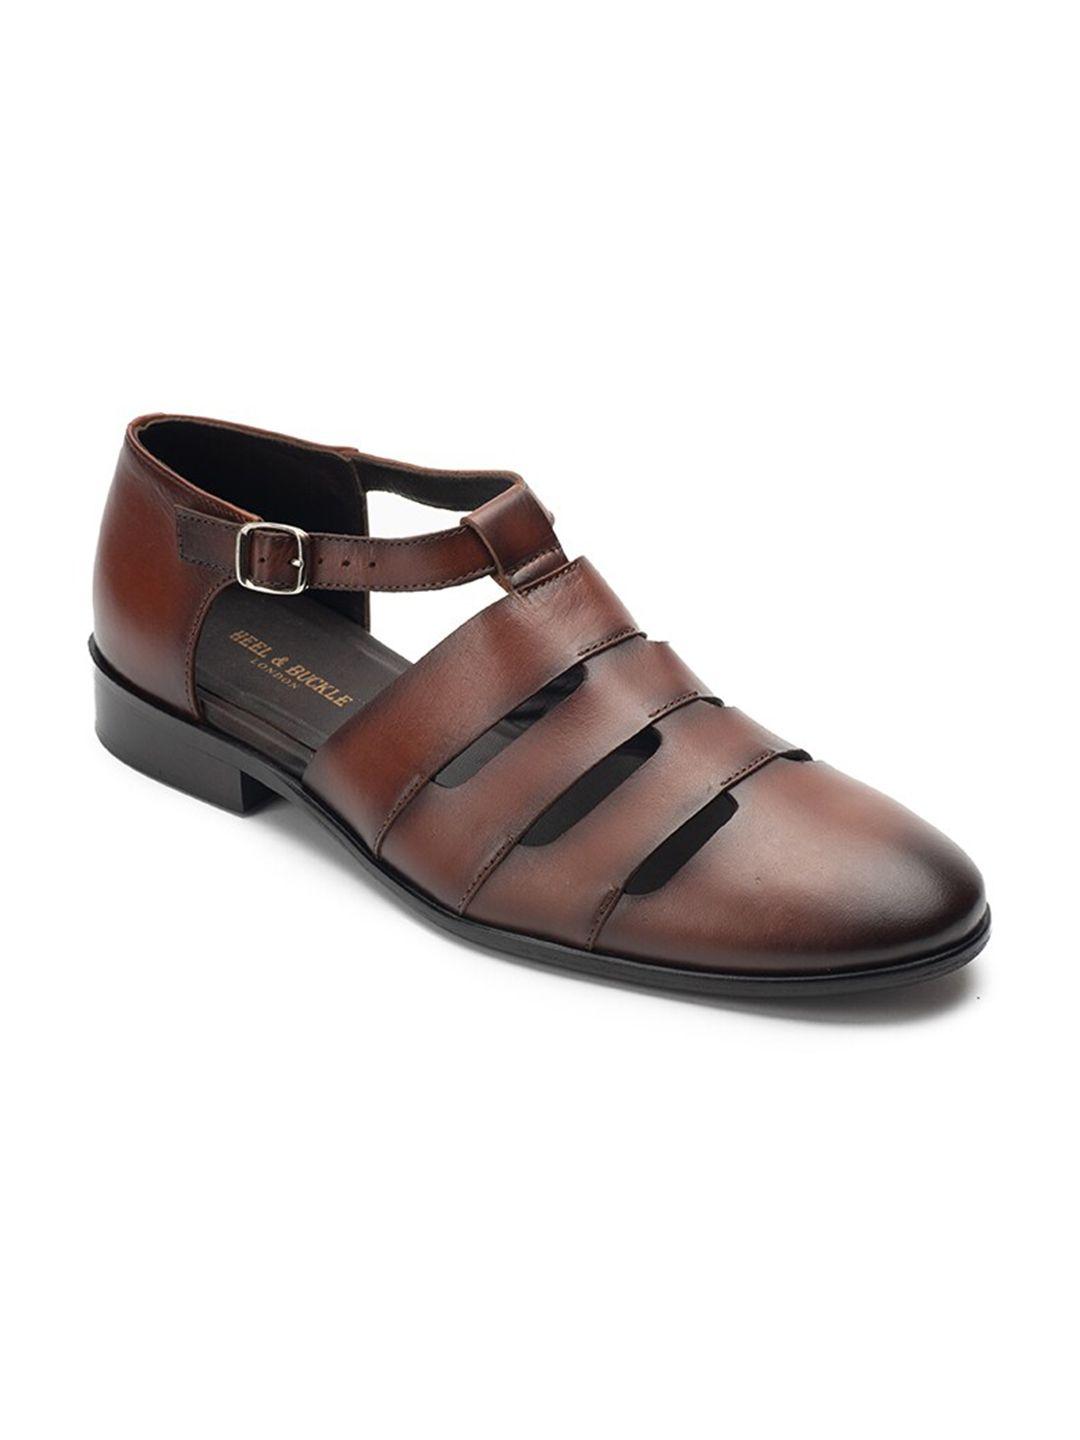 heel & buckle london men tan & grey leather shoe-style sandals